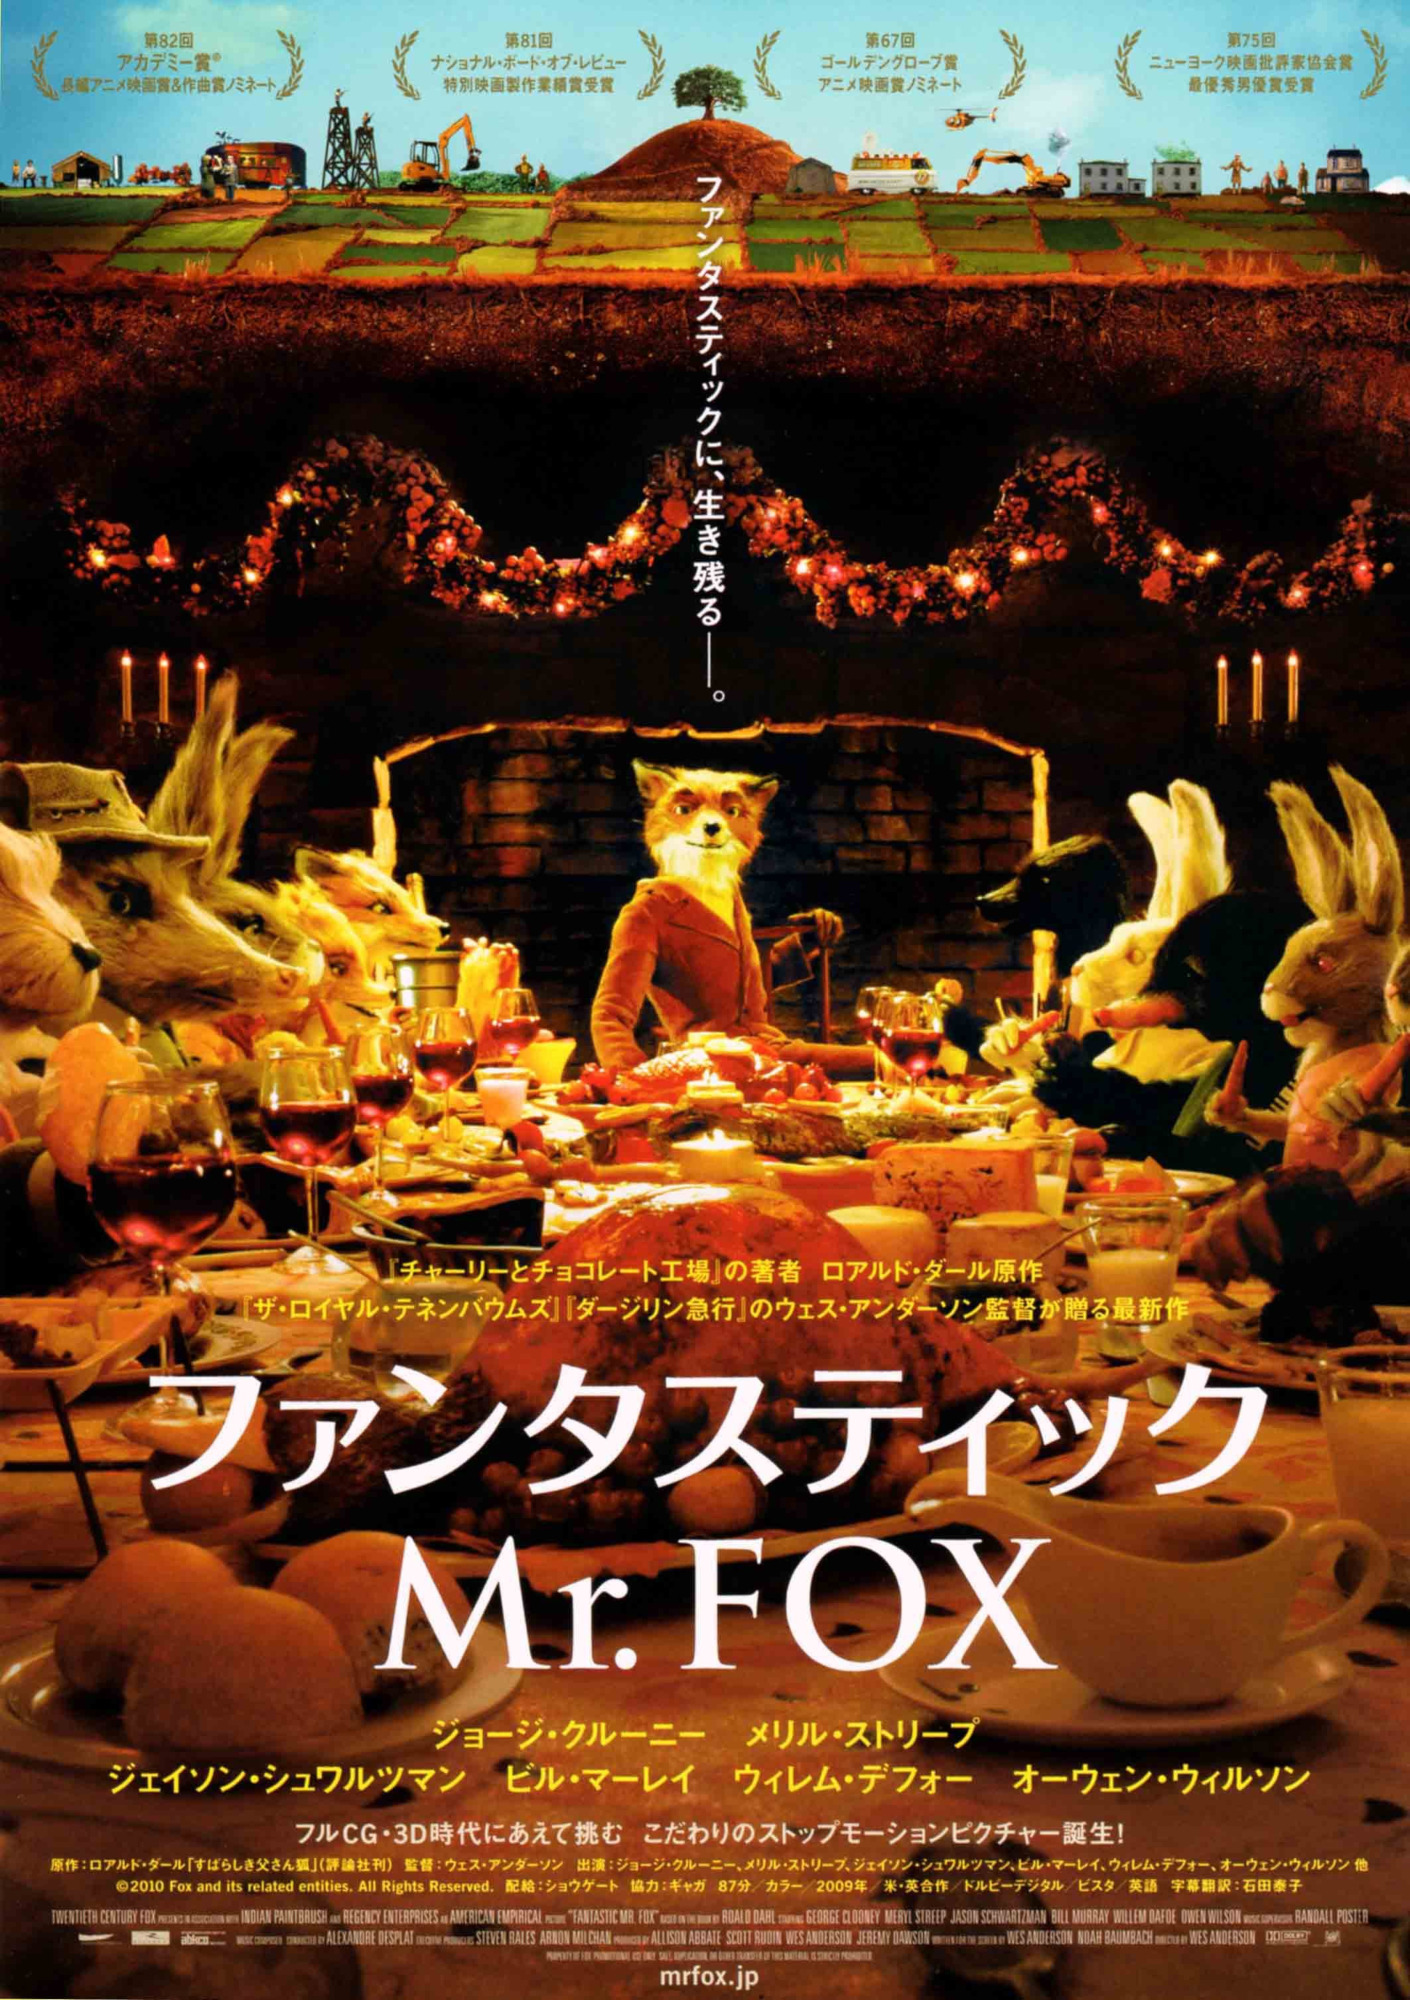 Mega Sized Movie Poster Image for Fantastic Mr. Fox (#11 of 11)